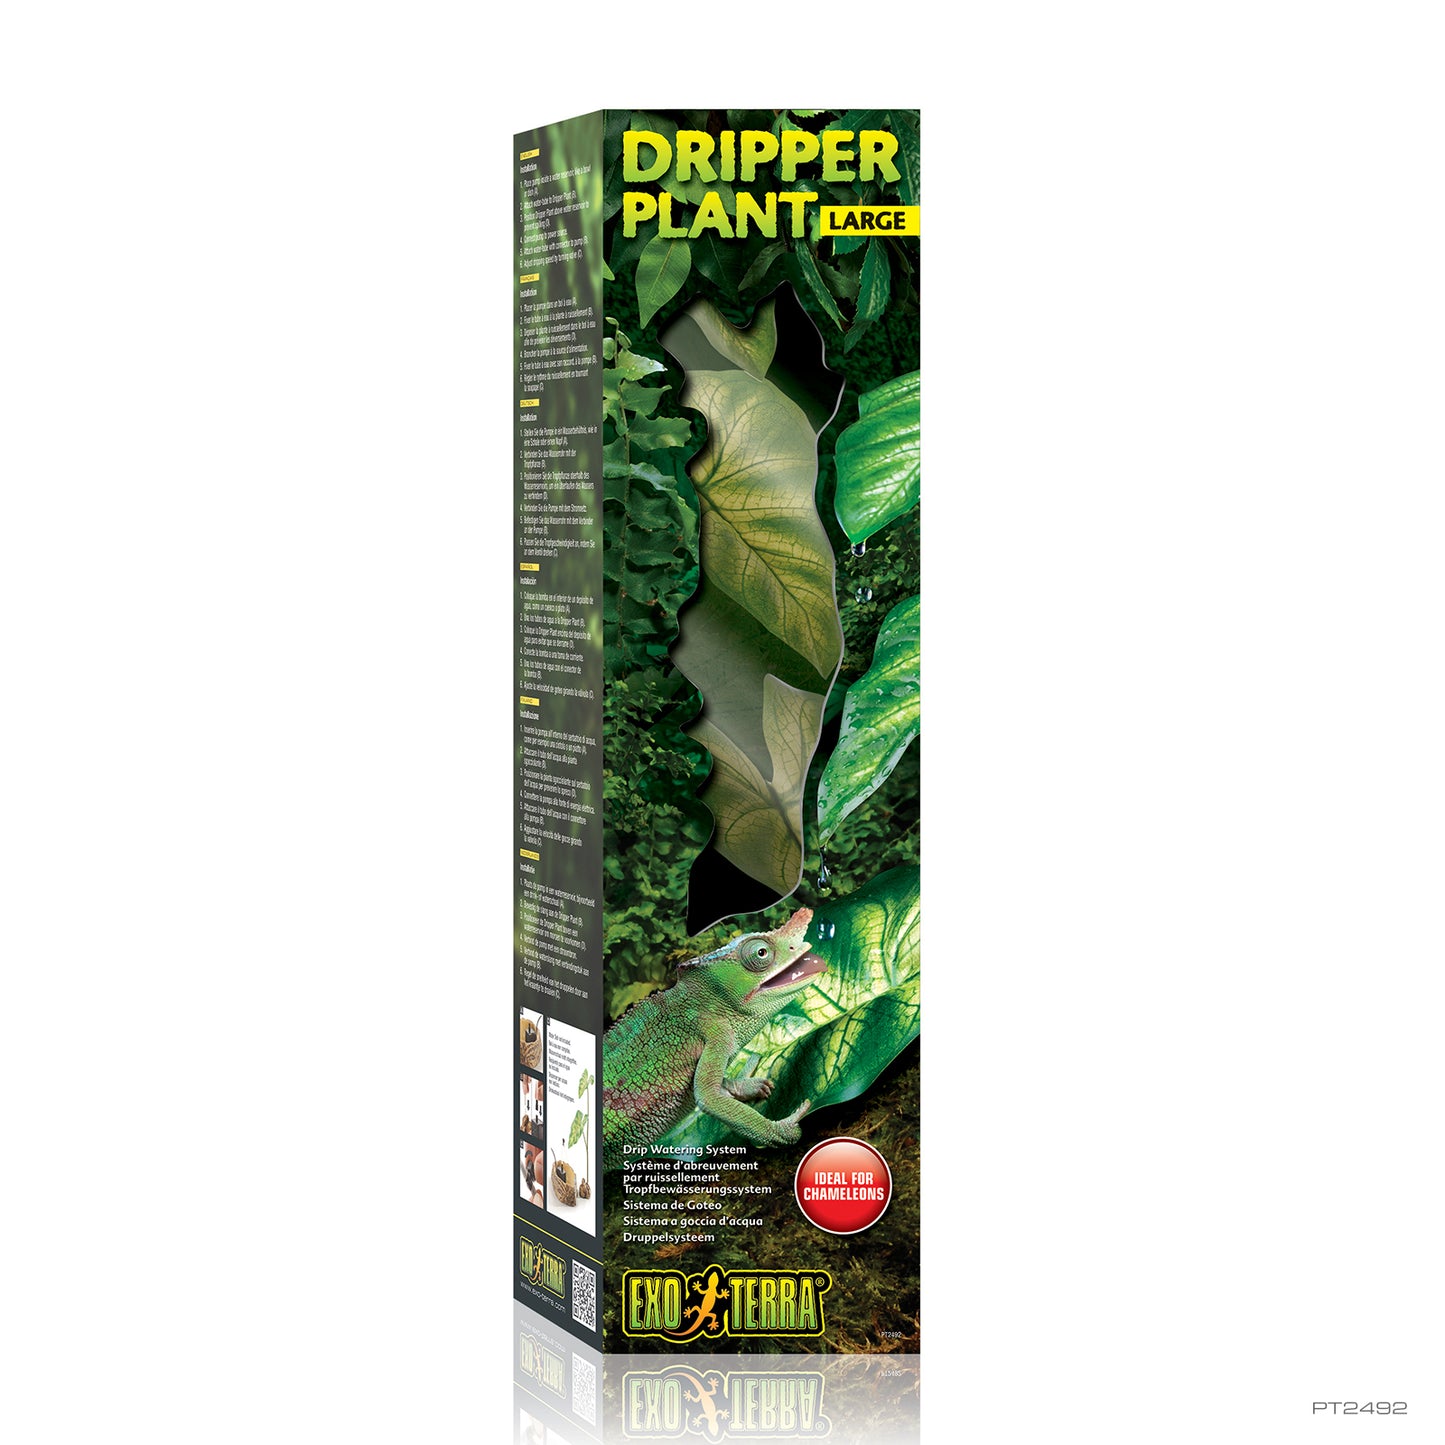 EXO TERRA DRIPPER PLANTS